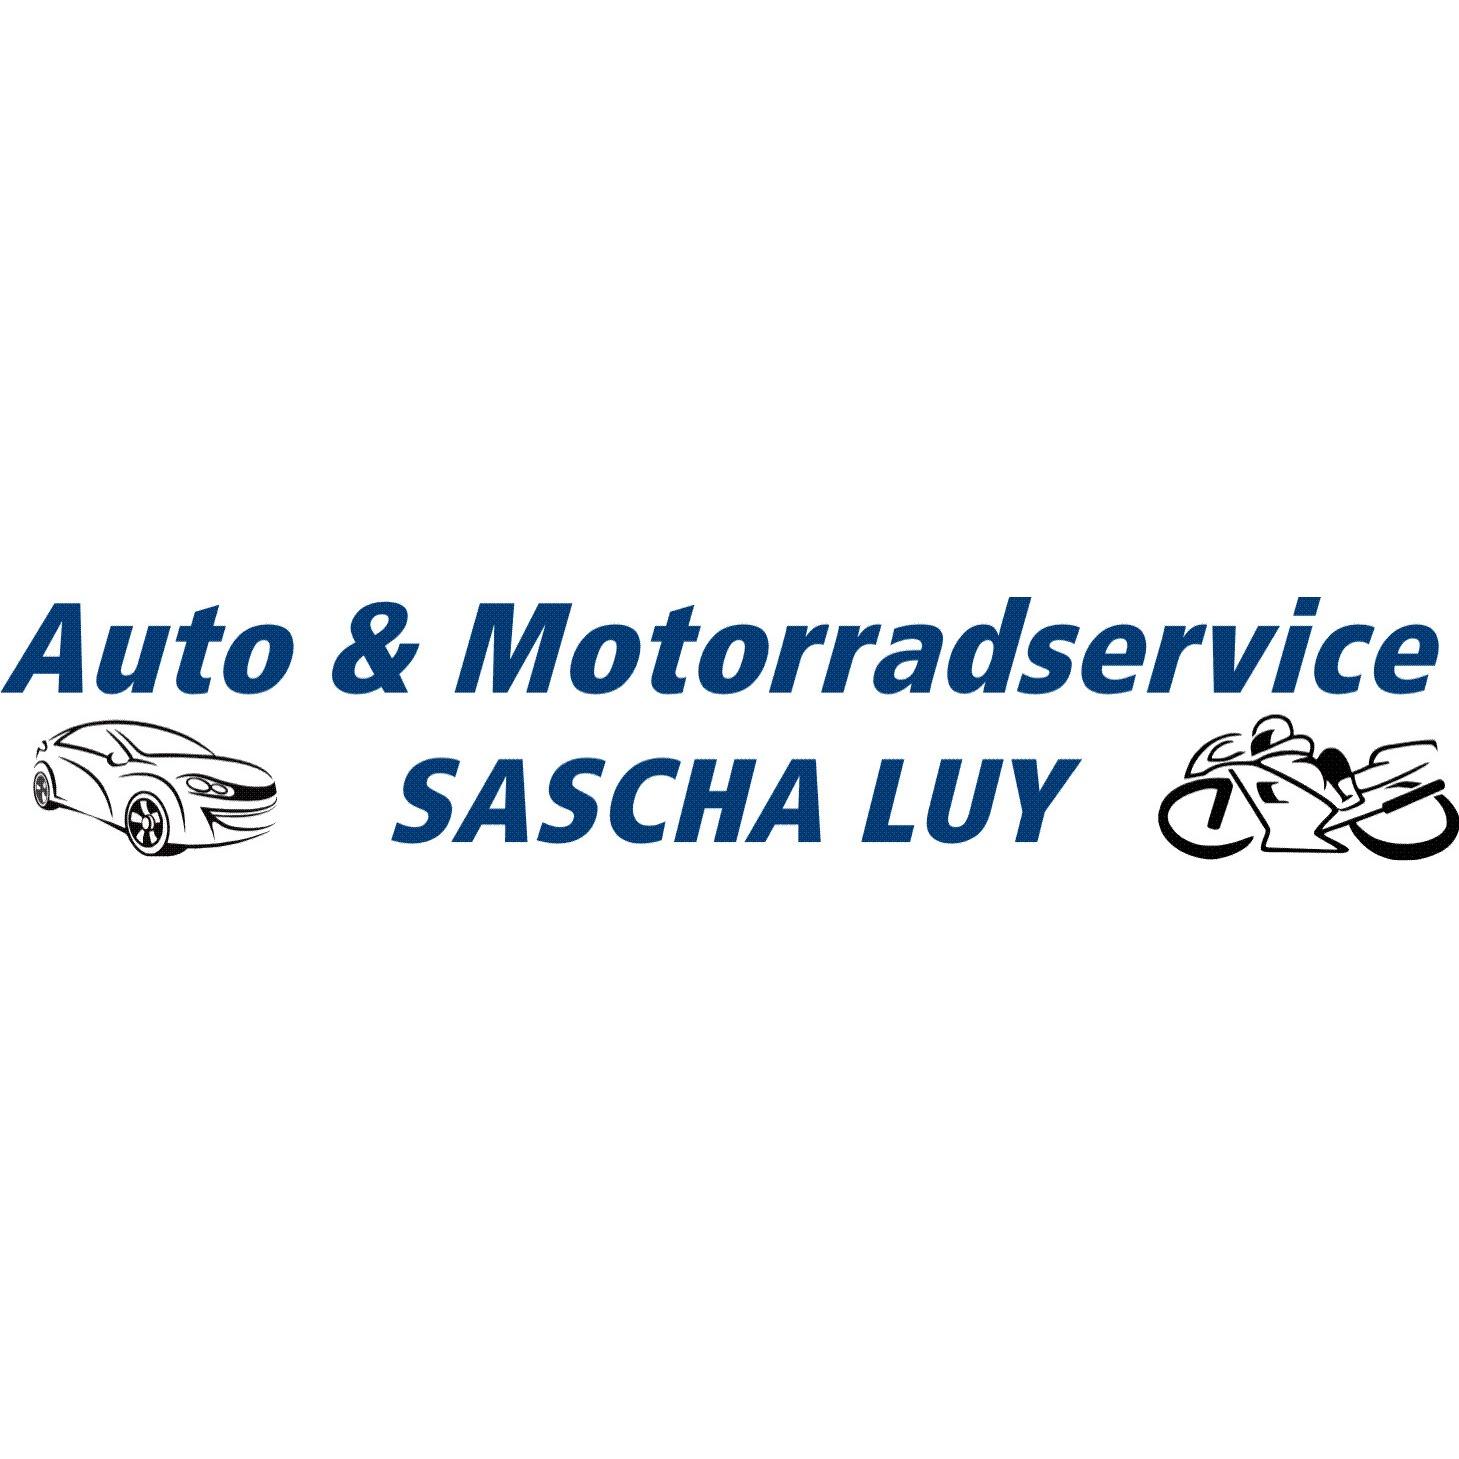 Auto & Motorradservice Sascha Luy